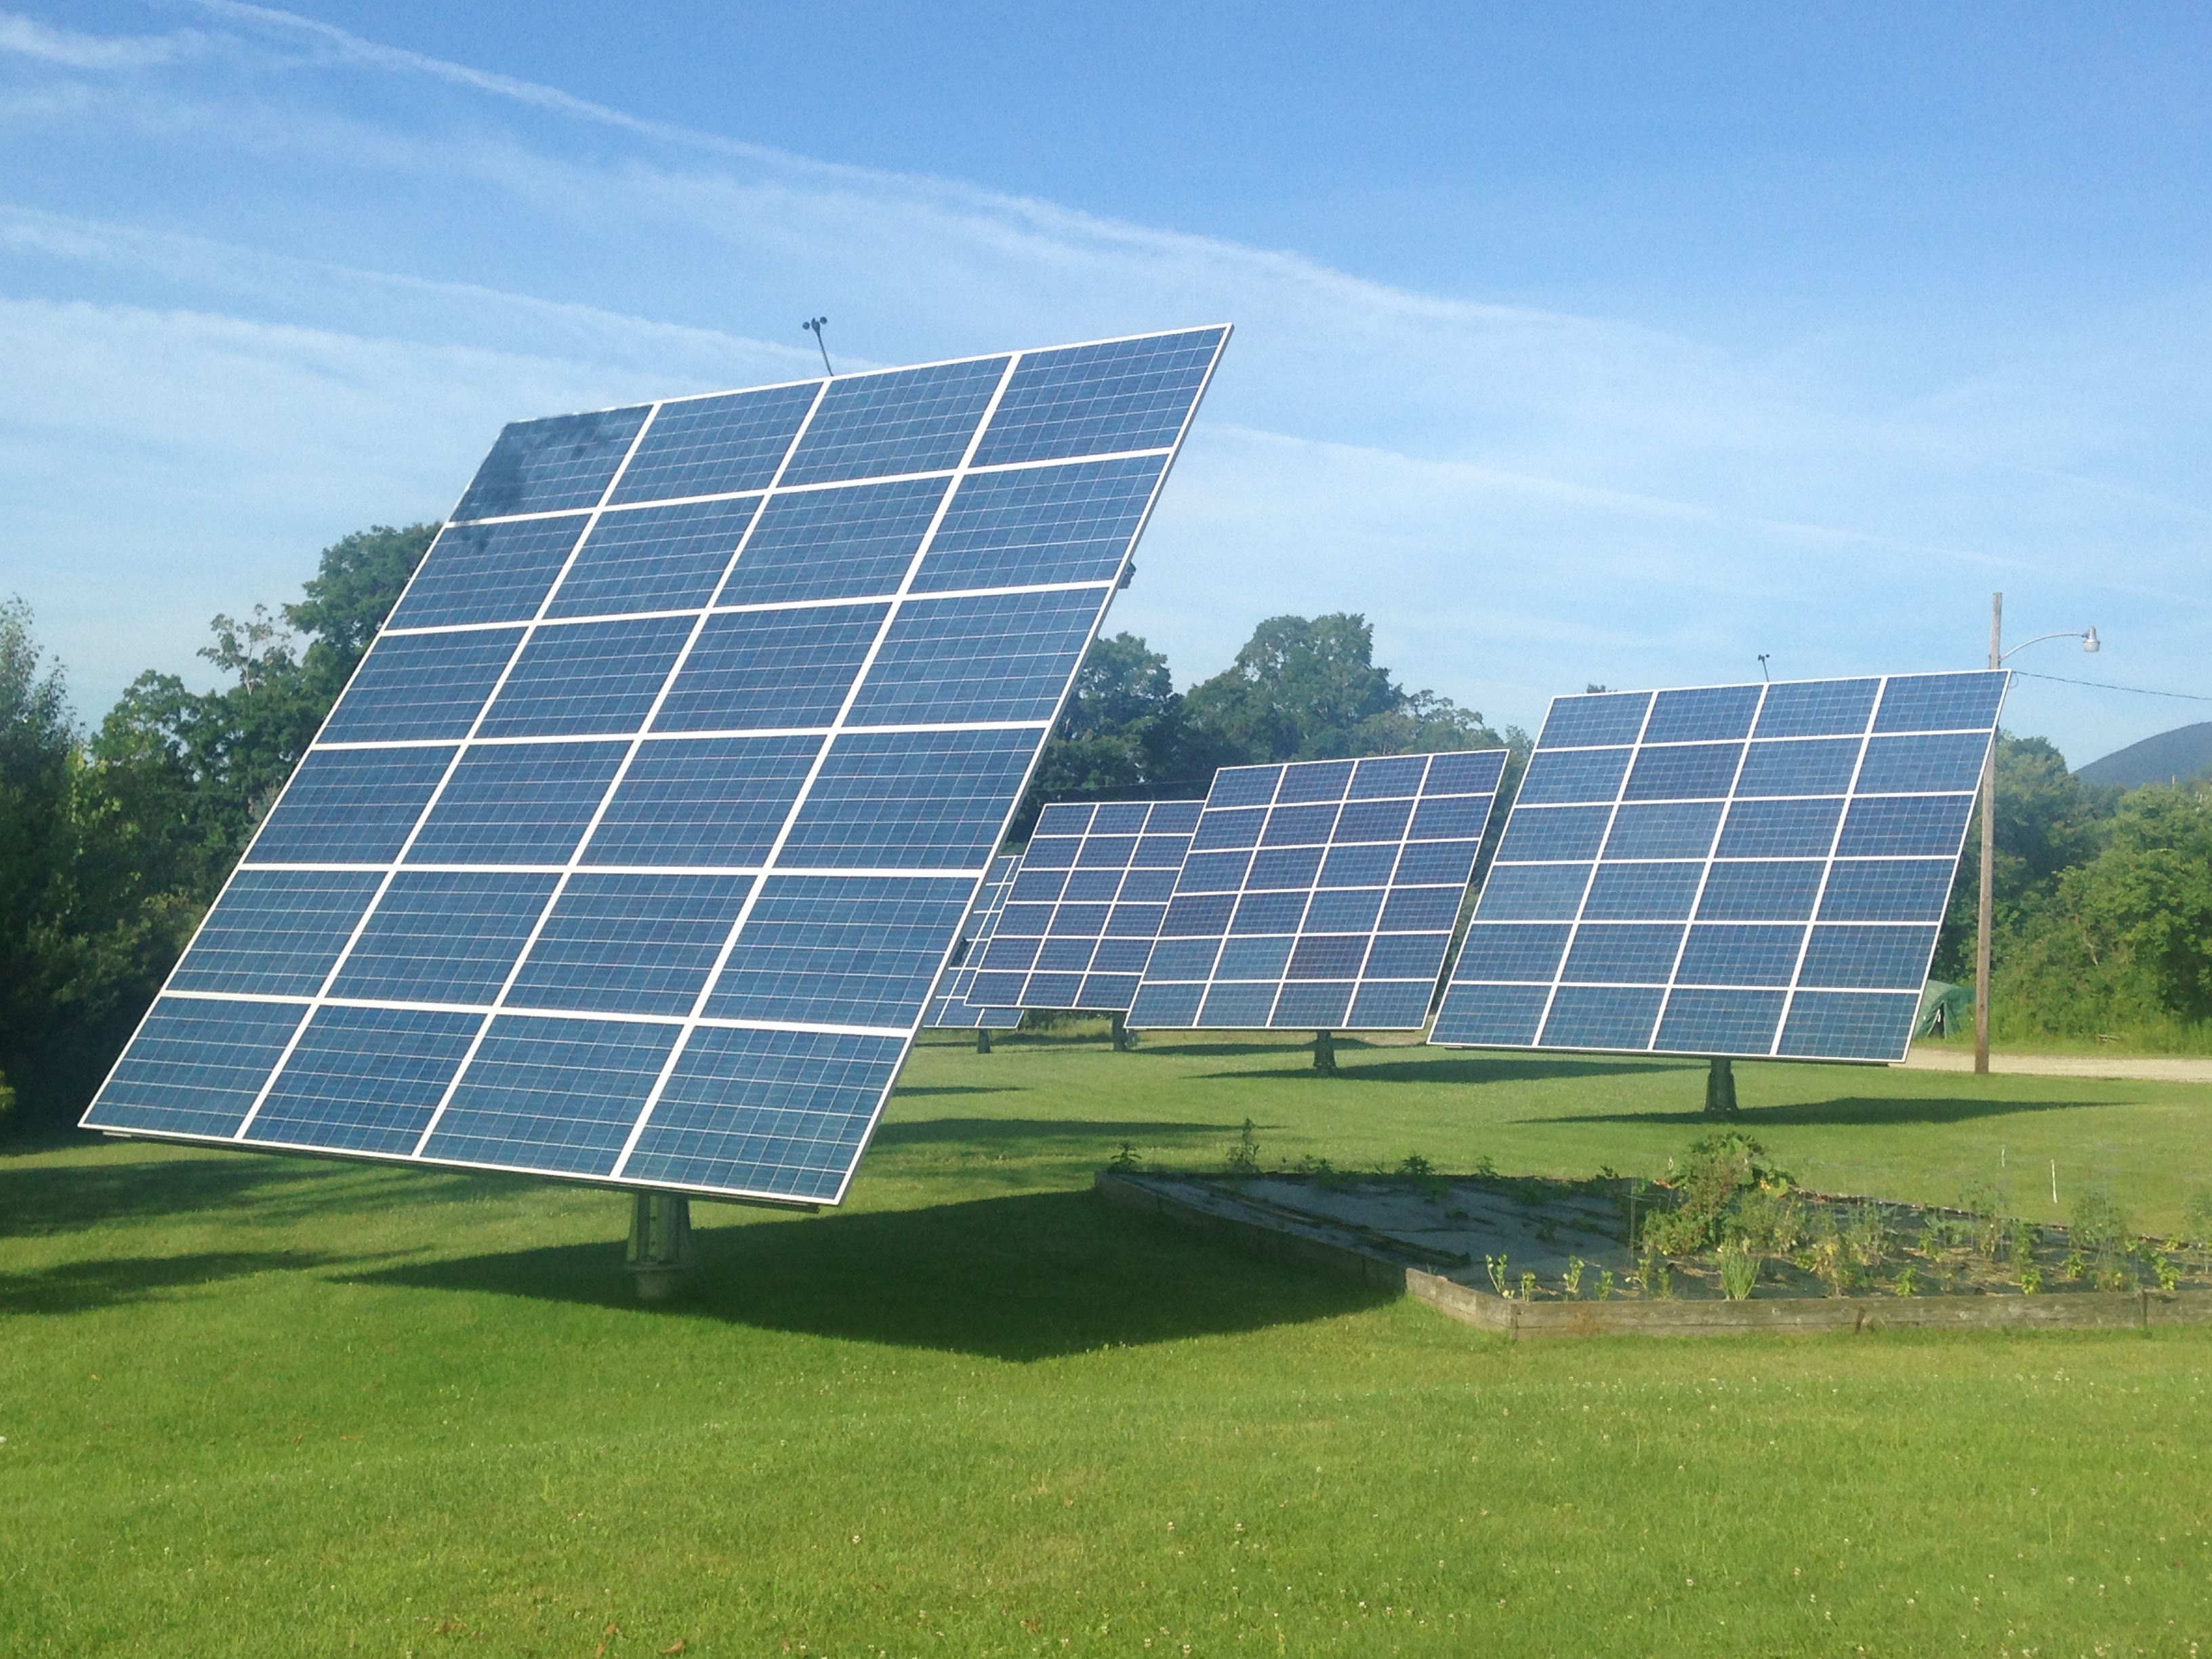 File:Solar Panel Array.jpg - Wikimedia Commons